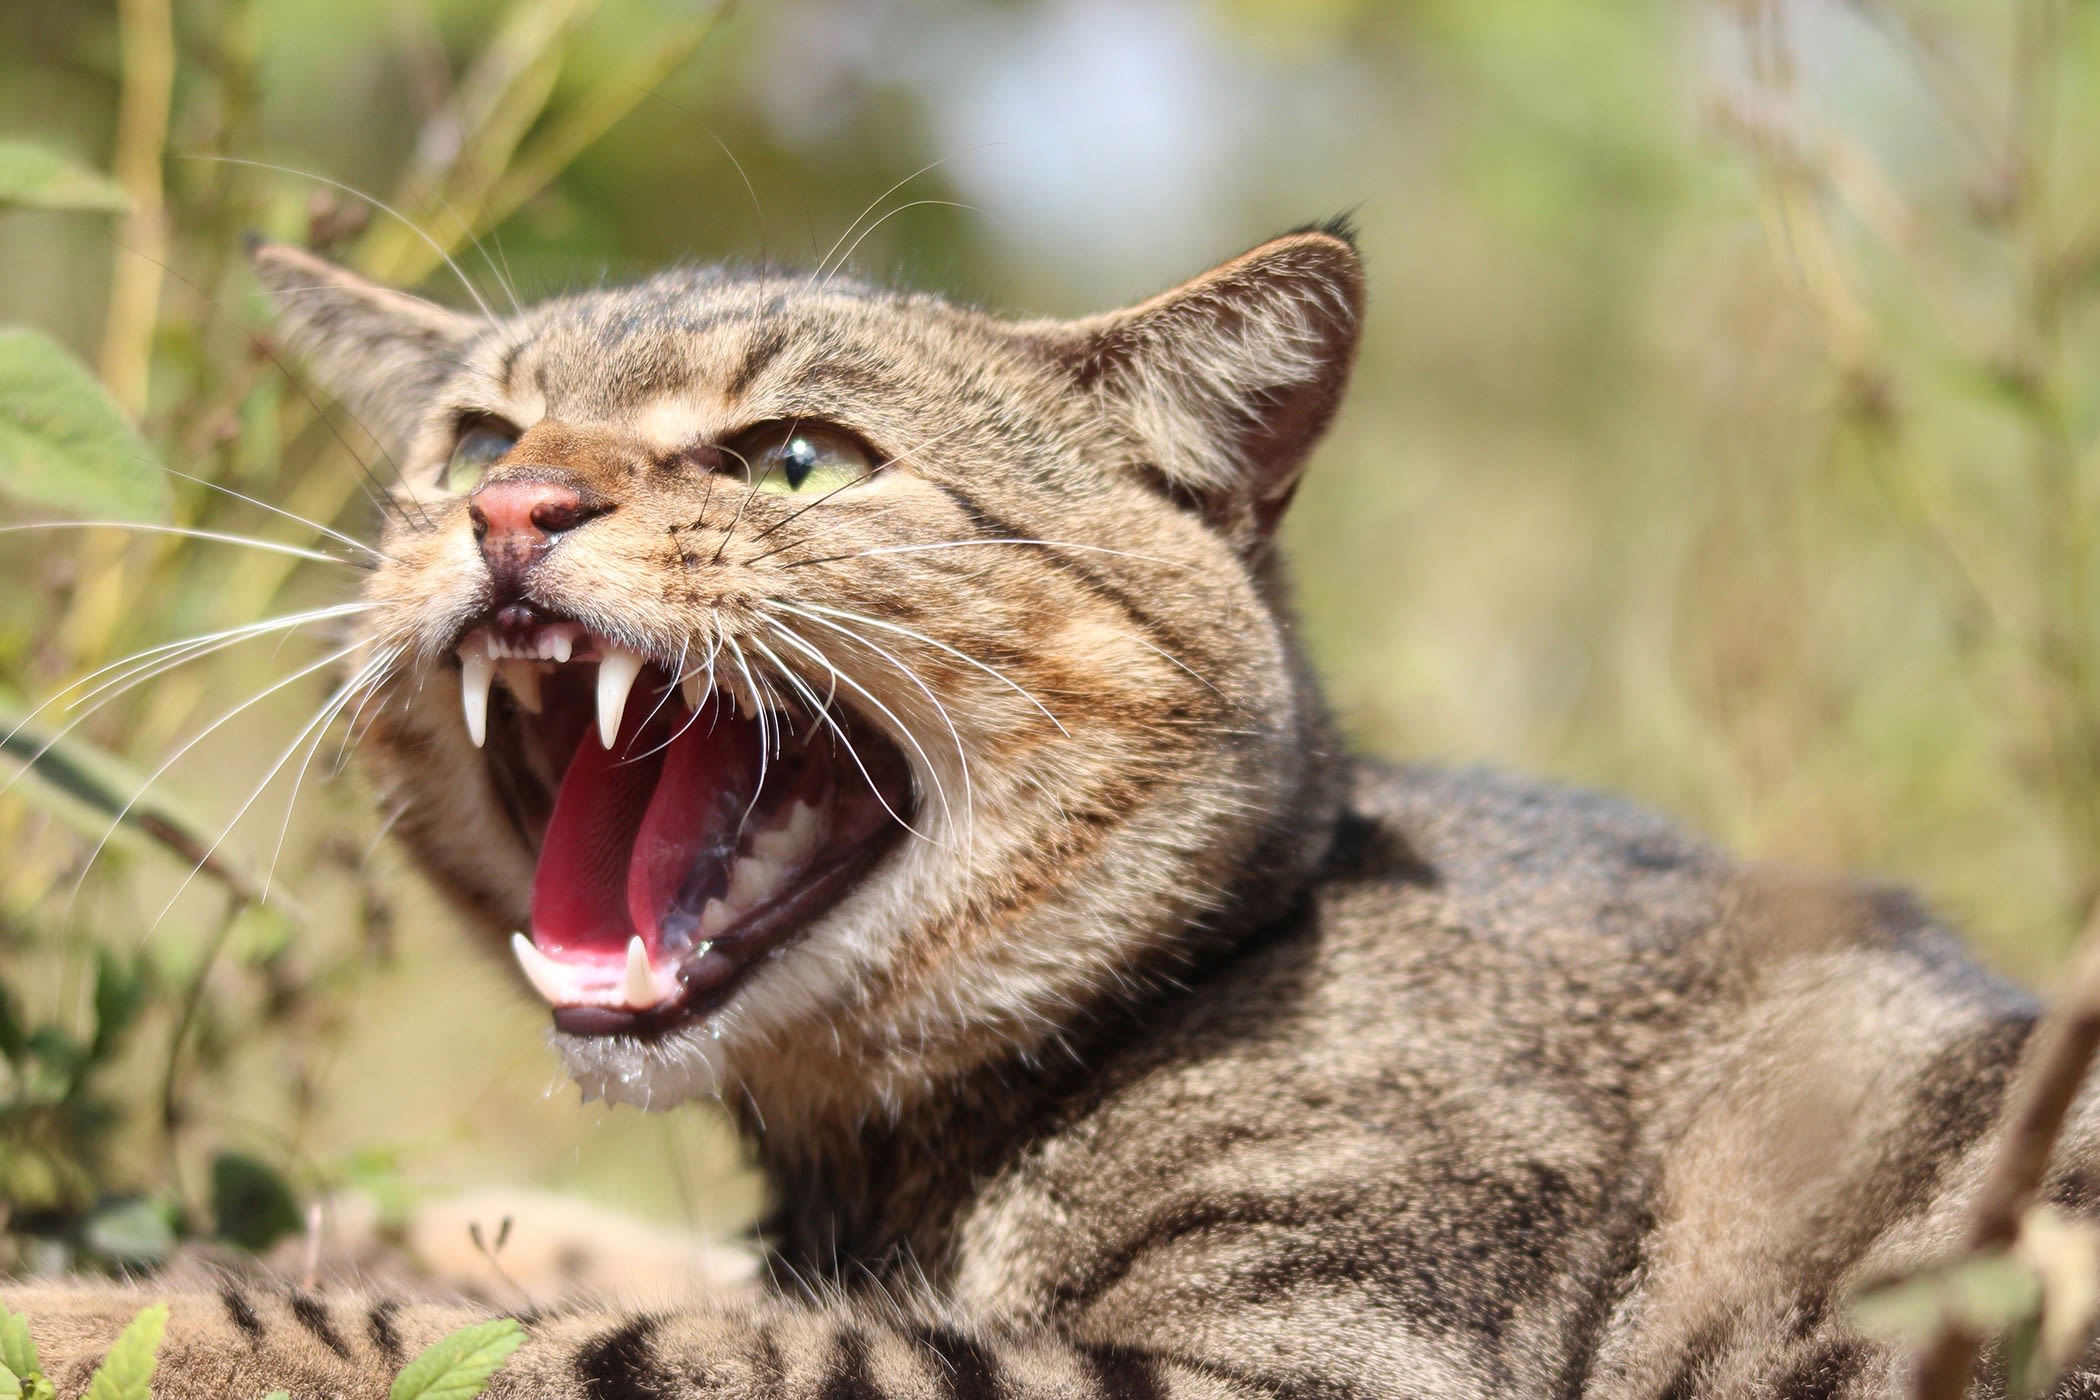 A close-up of a feral cat hissing